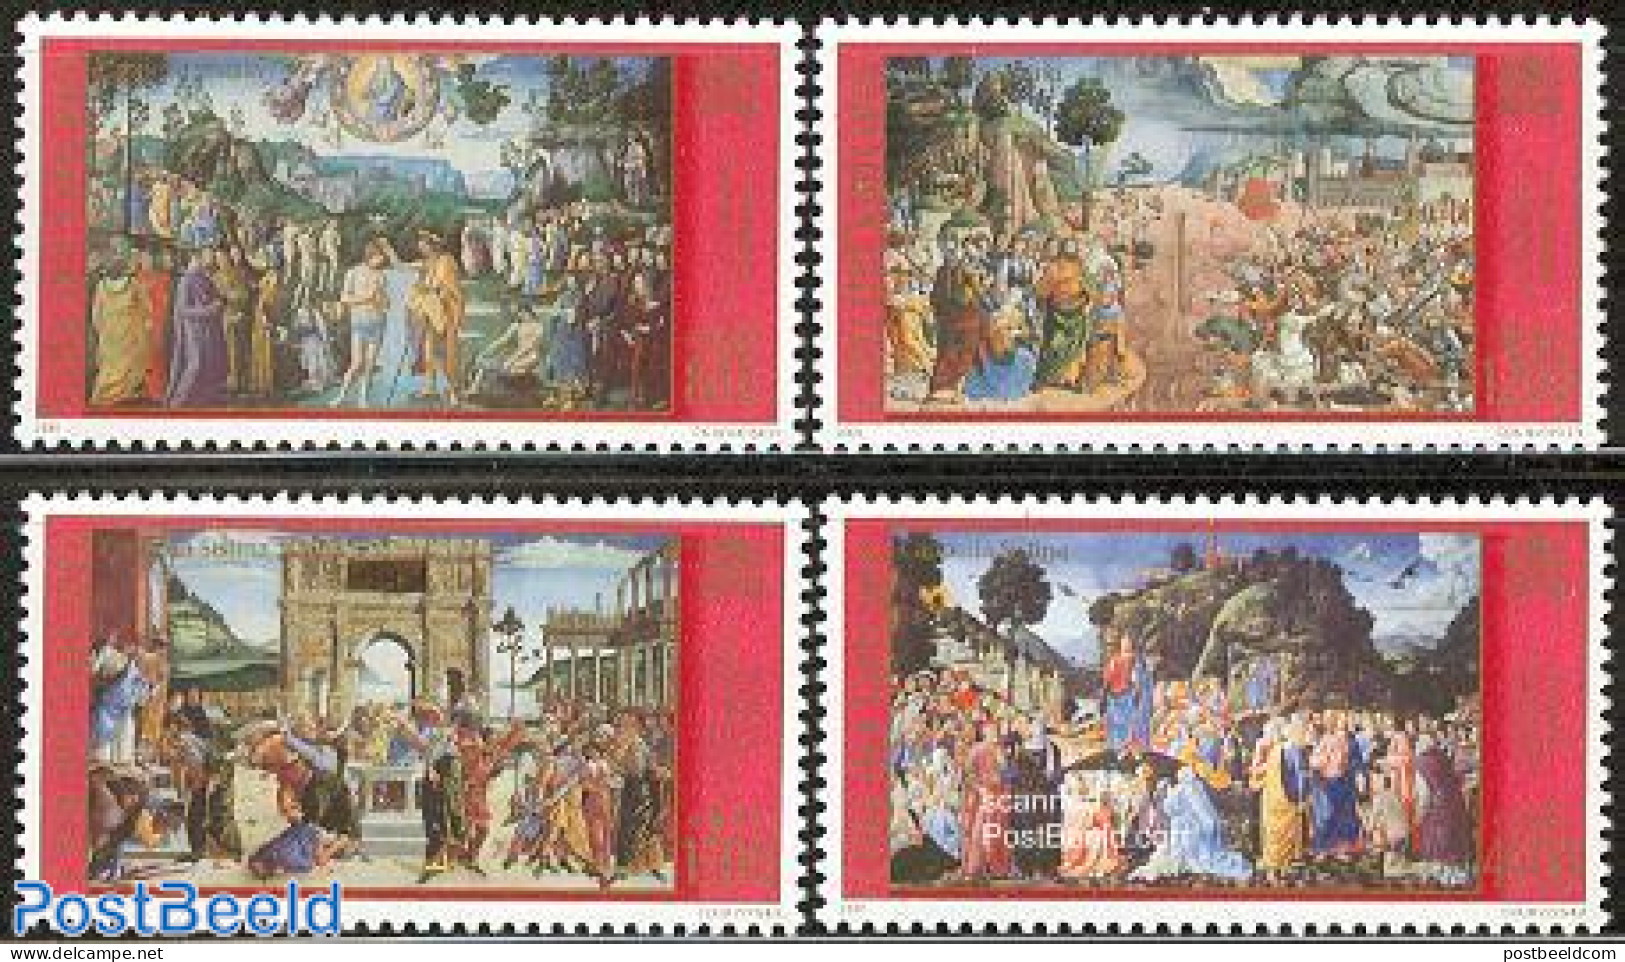 Vatican 2001 Sixtine Chapell 4v, Mint NH, Art - Paintings - Ongebruikt